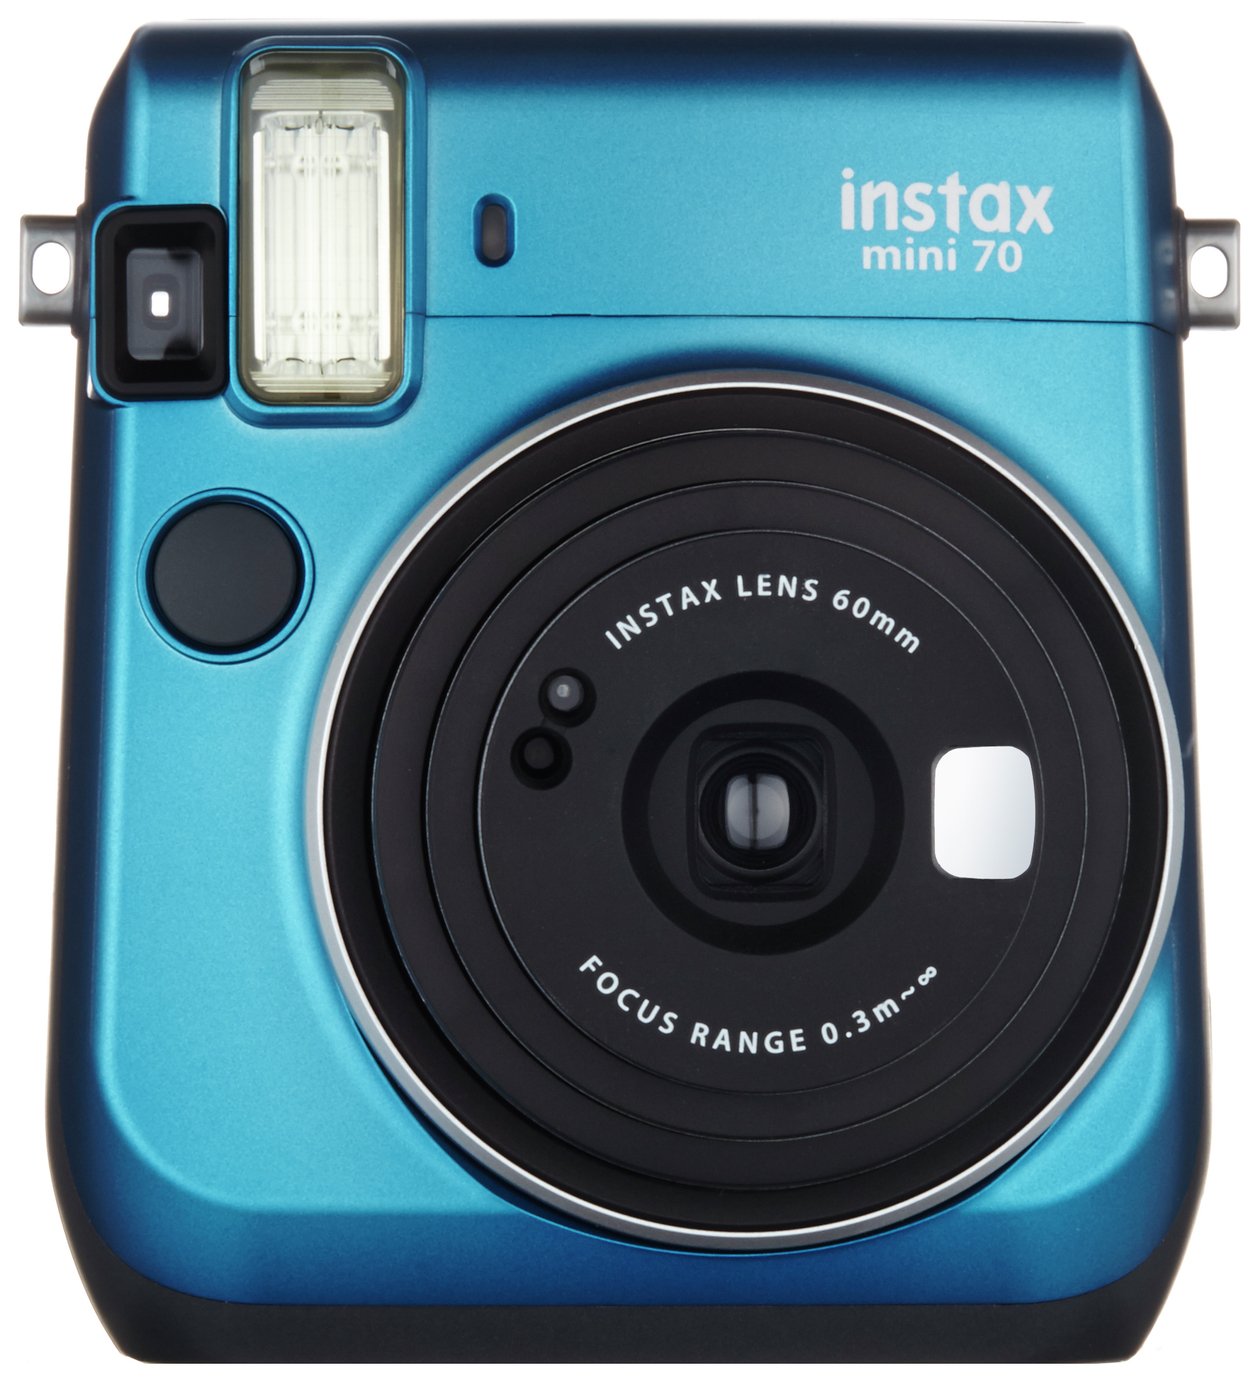 instax Mini 70 camera with 10 shots - Blue